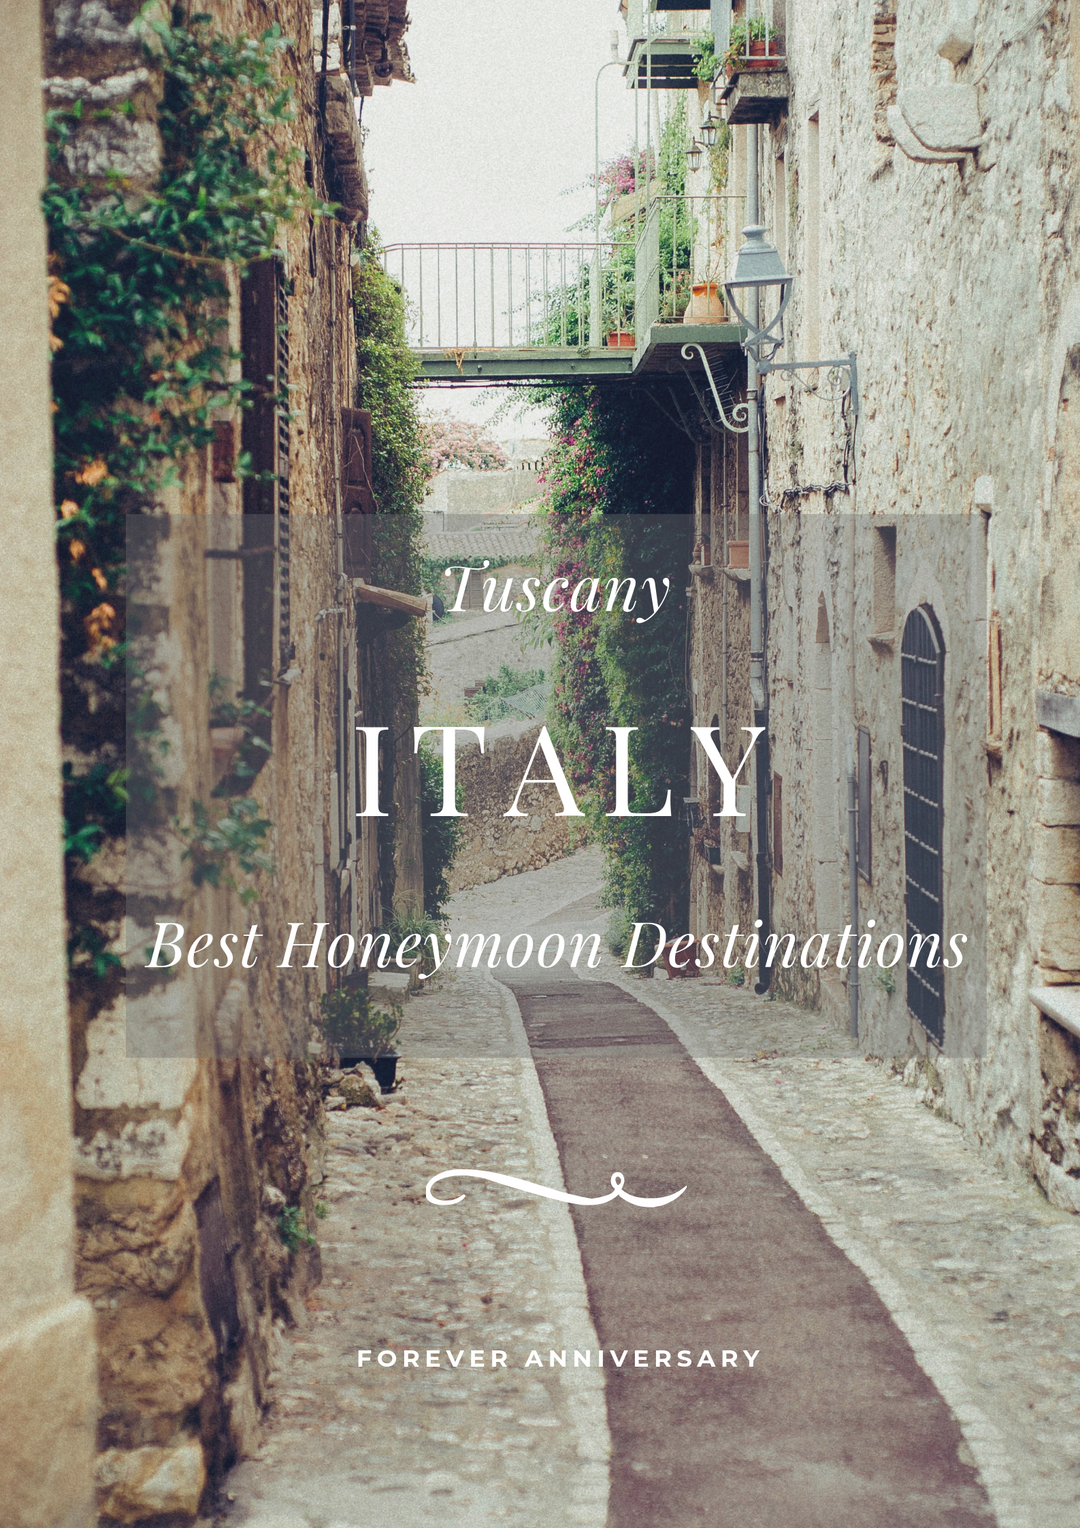 Best Honeymoon Destinations (Tuscany, Italy)